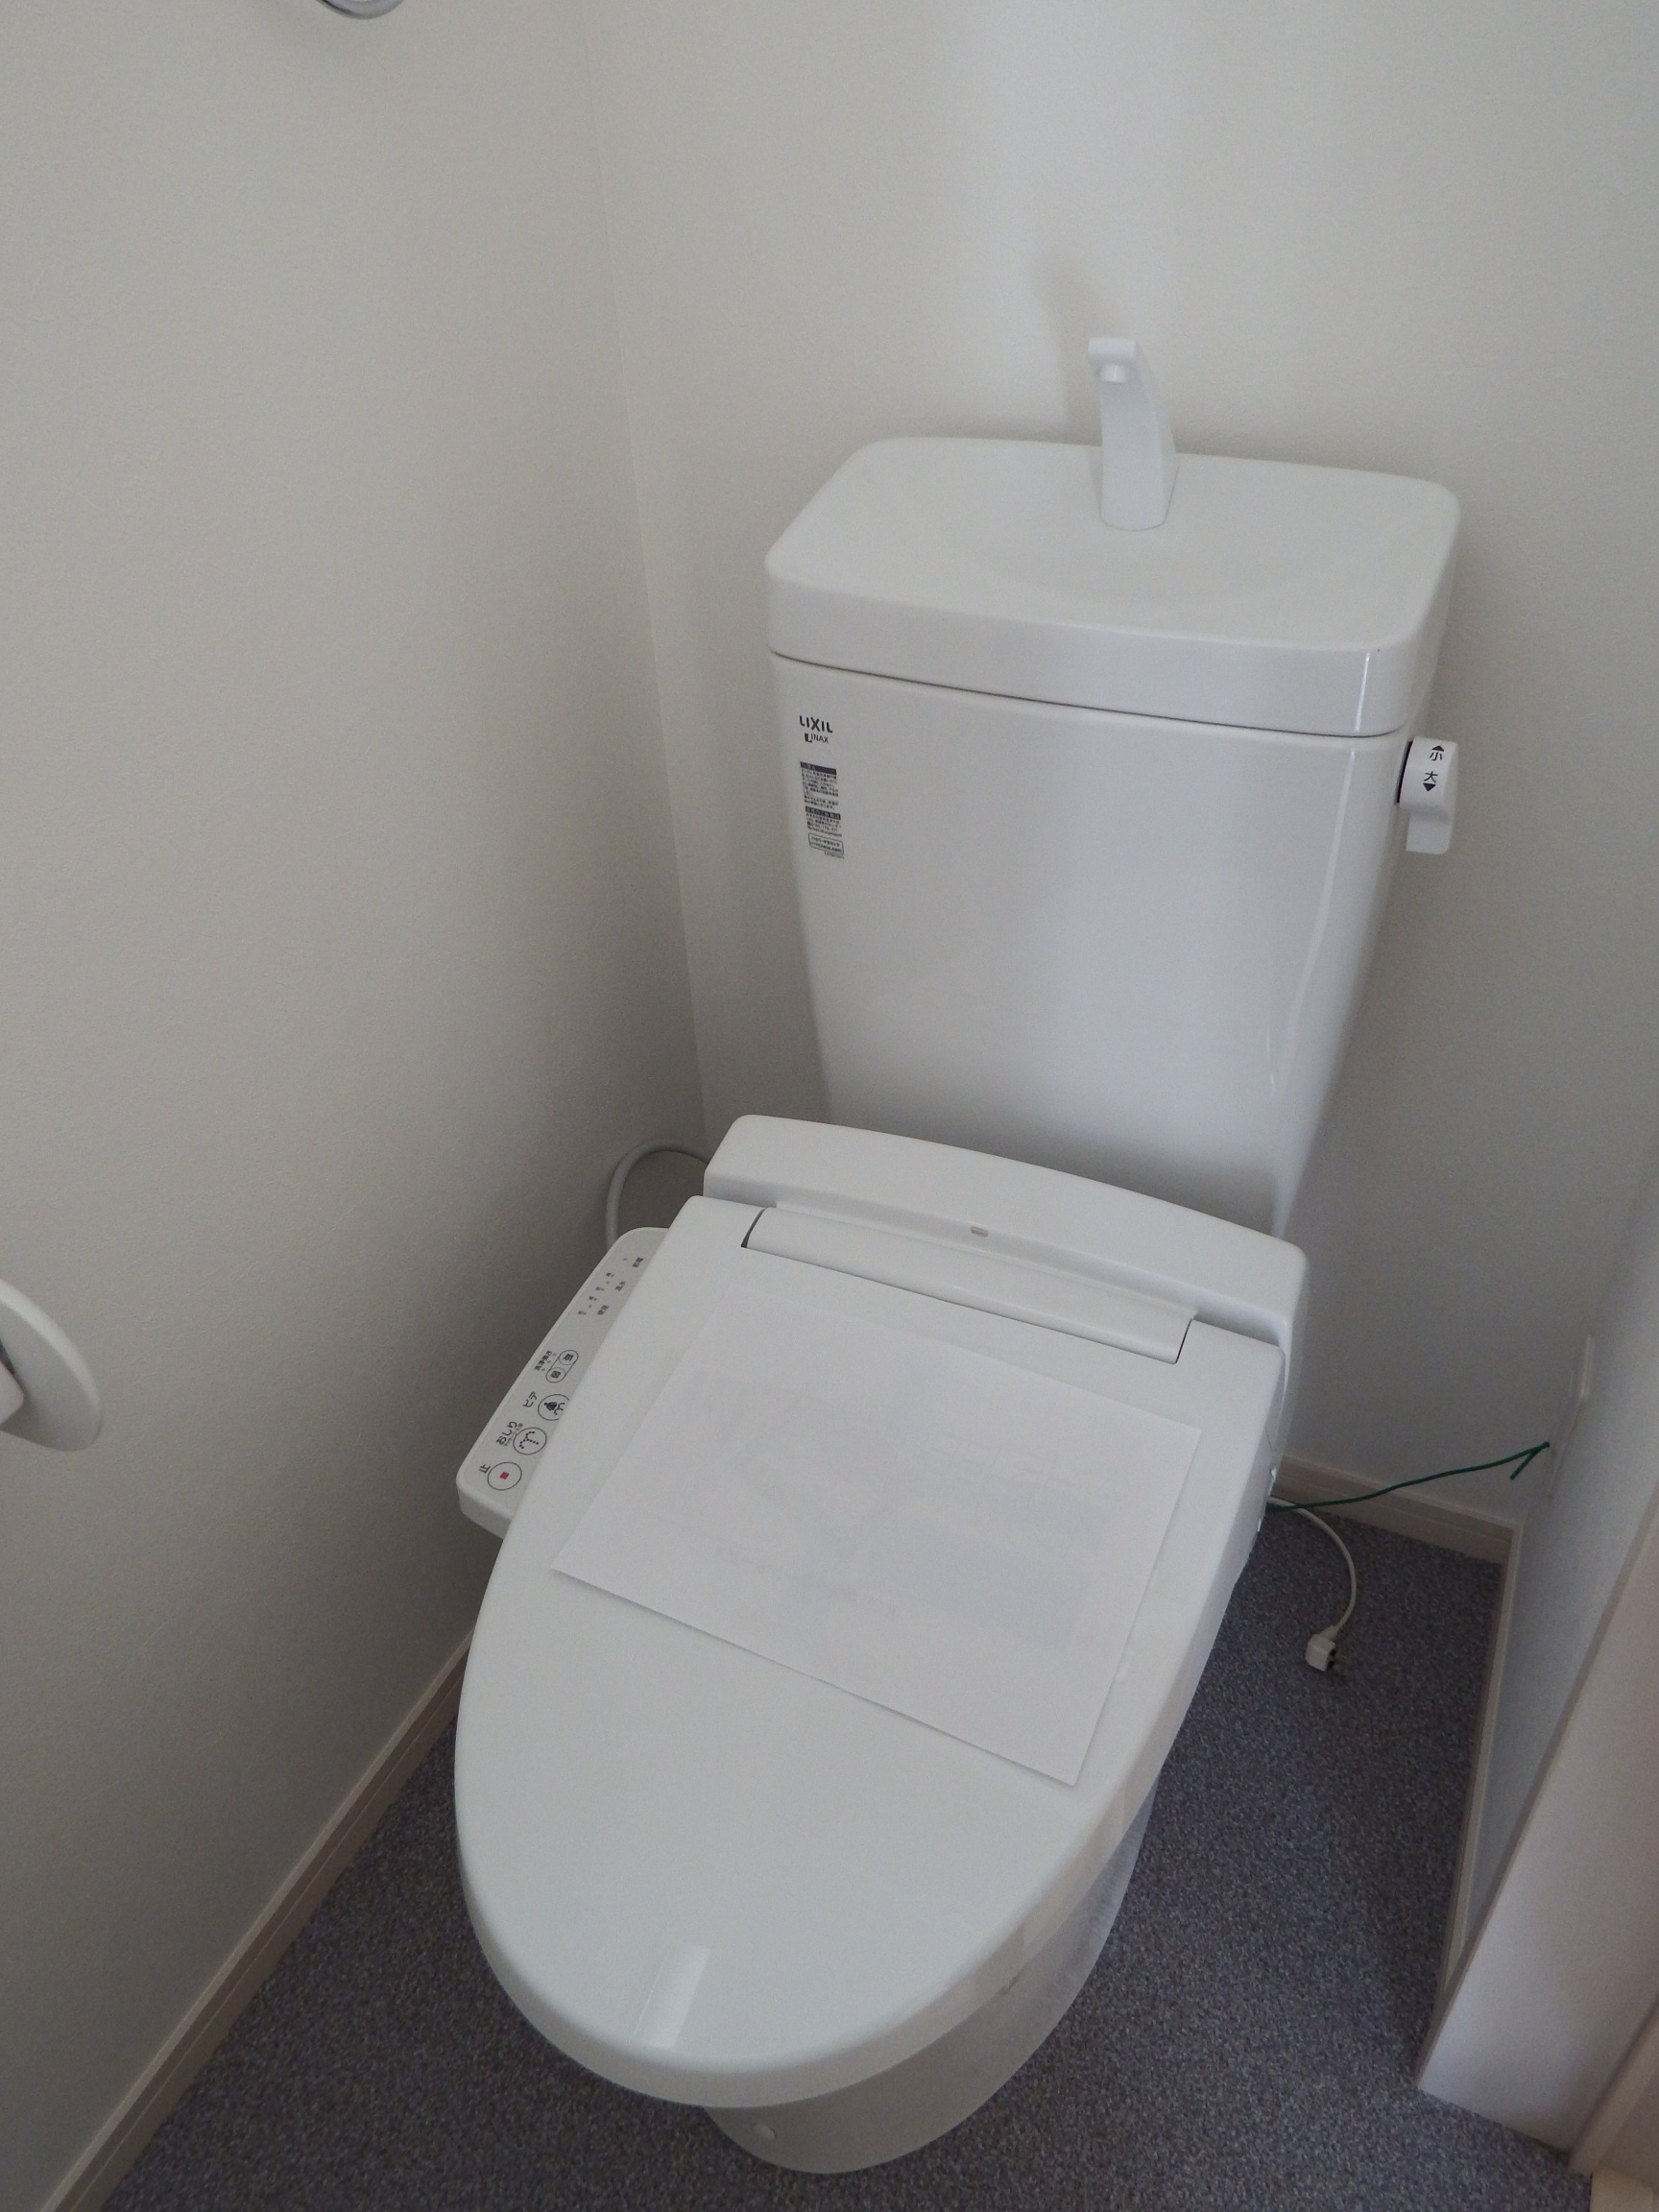 Toilet. Photos of the preceding model house (same equipment you plan to use)